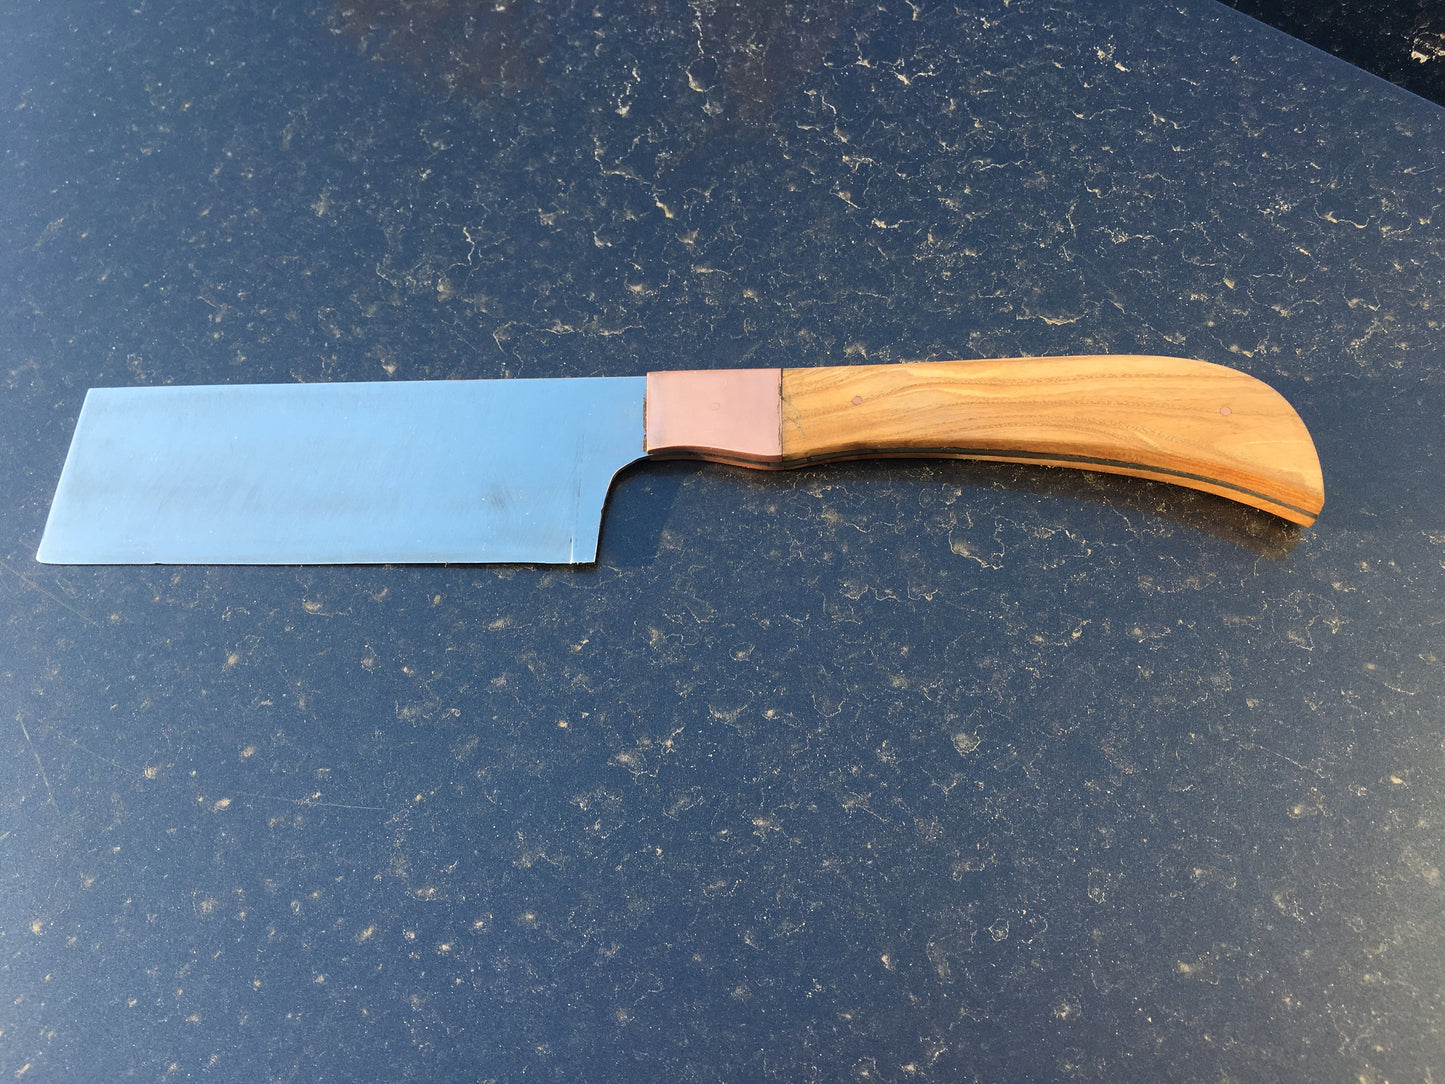 Slicer knife, slicer, knife slicer, bps knives, culinary knife, kitchen knives, butcher,cleaver knife,kitchen cleaver,meat cleaver,chef gift